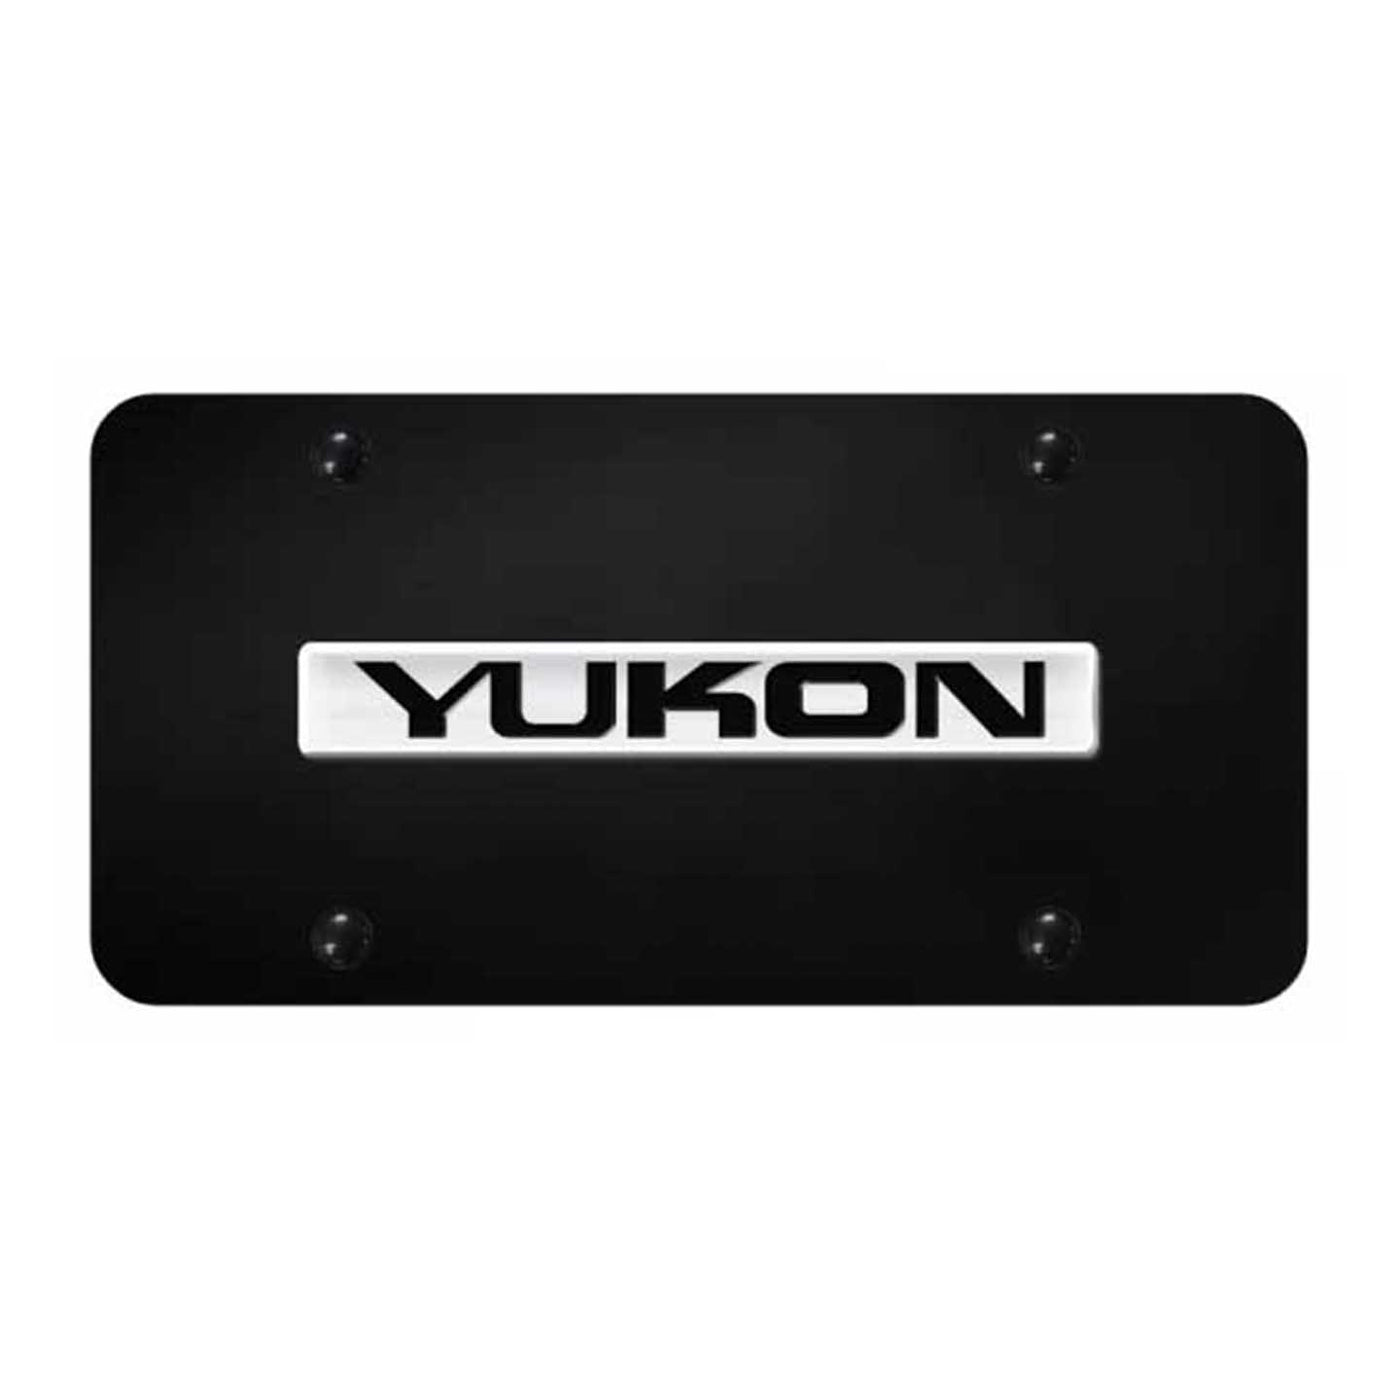 Yukon Name License Plate - Chrome on Black